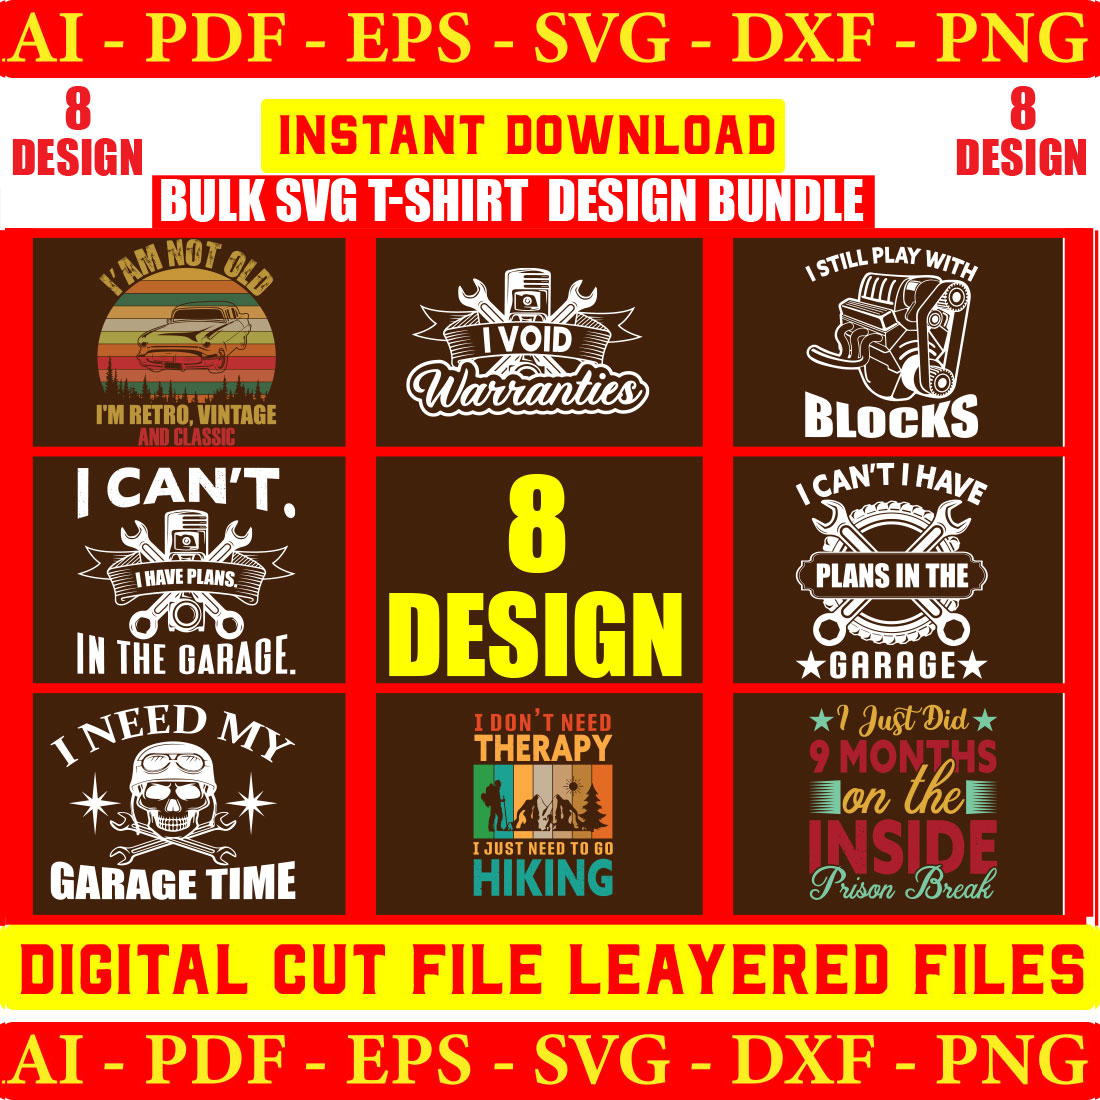 Bulk SVG T-shirt Design Bundle Vol- 04 cover image.